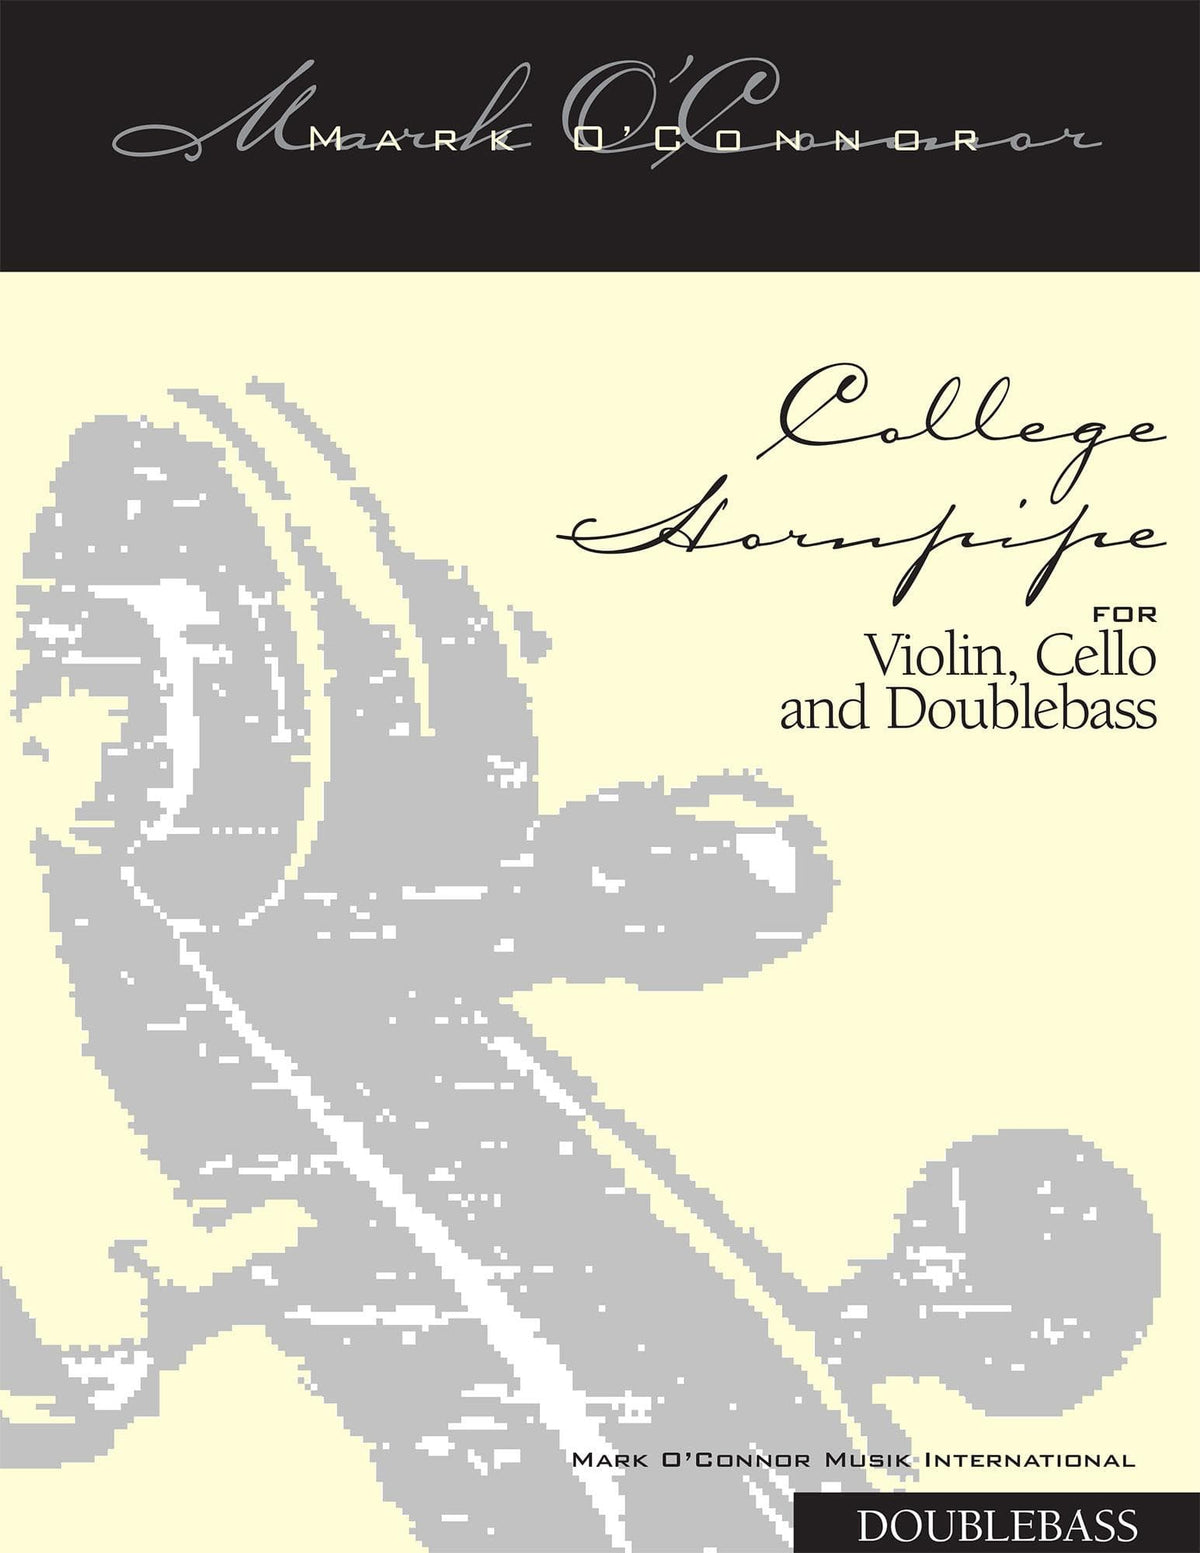 O'Connor, Mark - College Hornpipe for Violin, Cello, and Bass - Bass - Digital Download